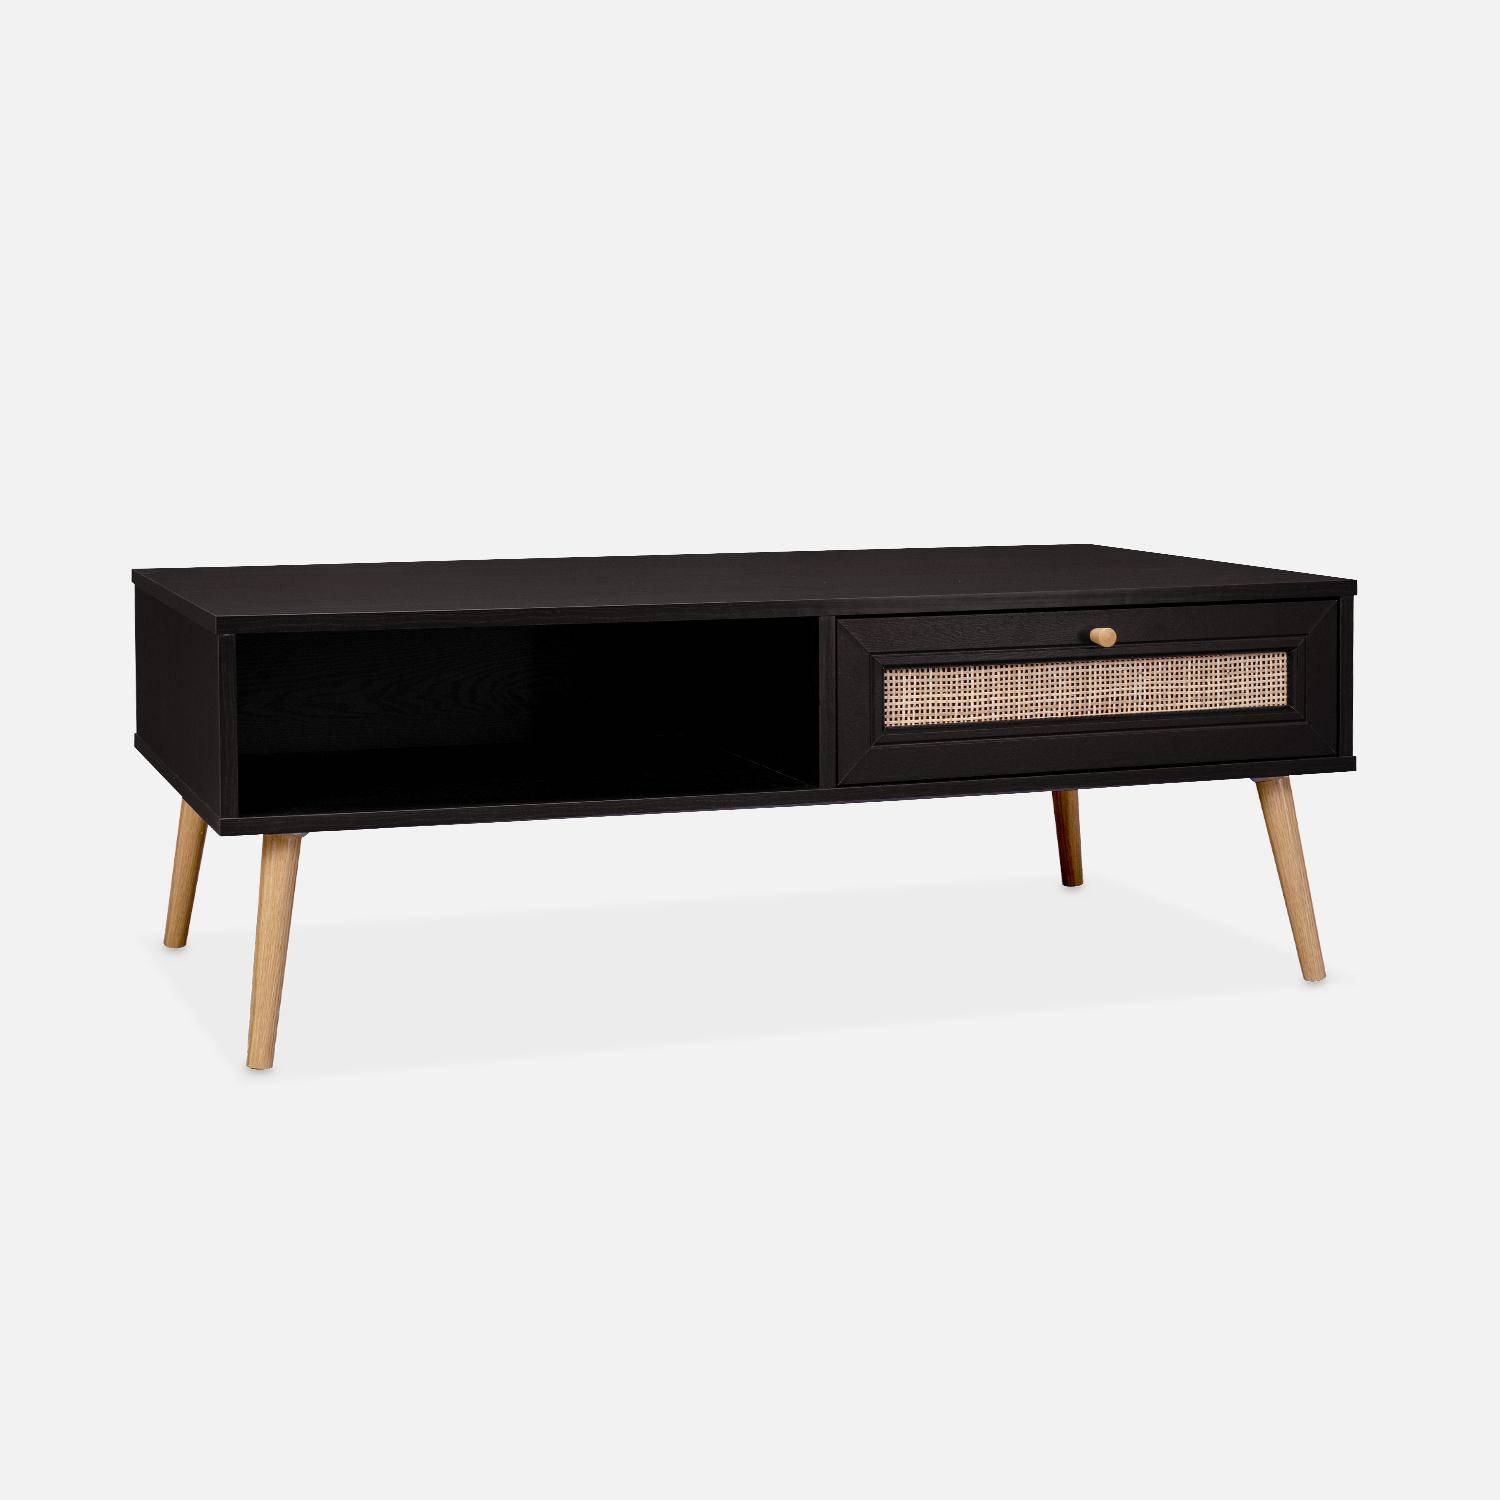  Wood and woven rattan coffee table with storage, 110x59x39cm, black, Boheme,sweeek,Photo2